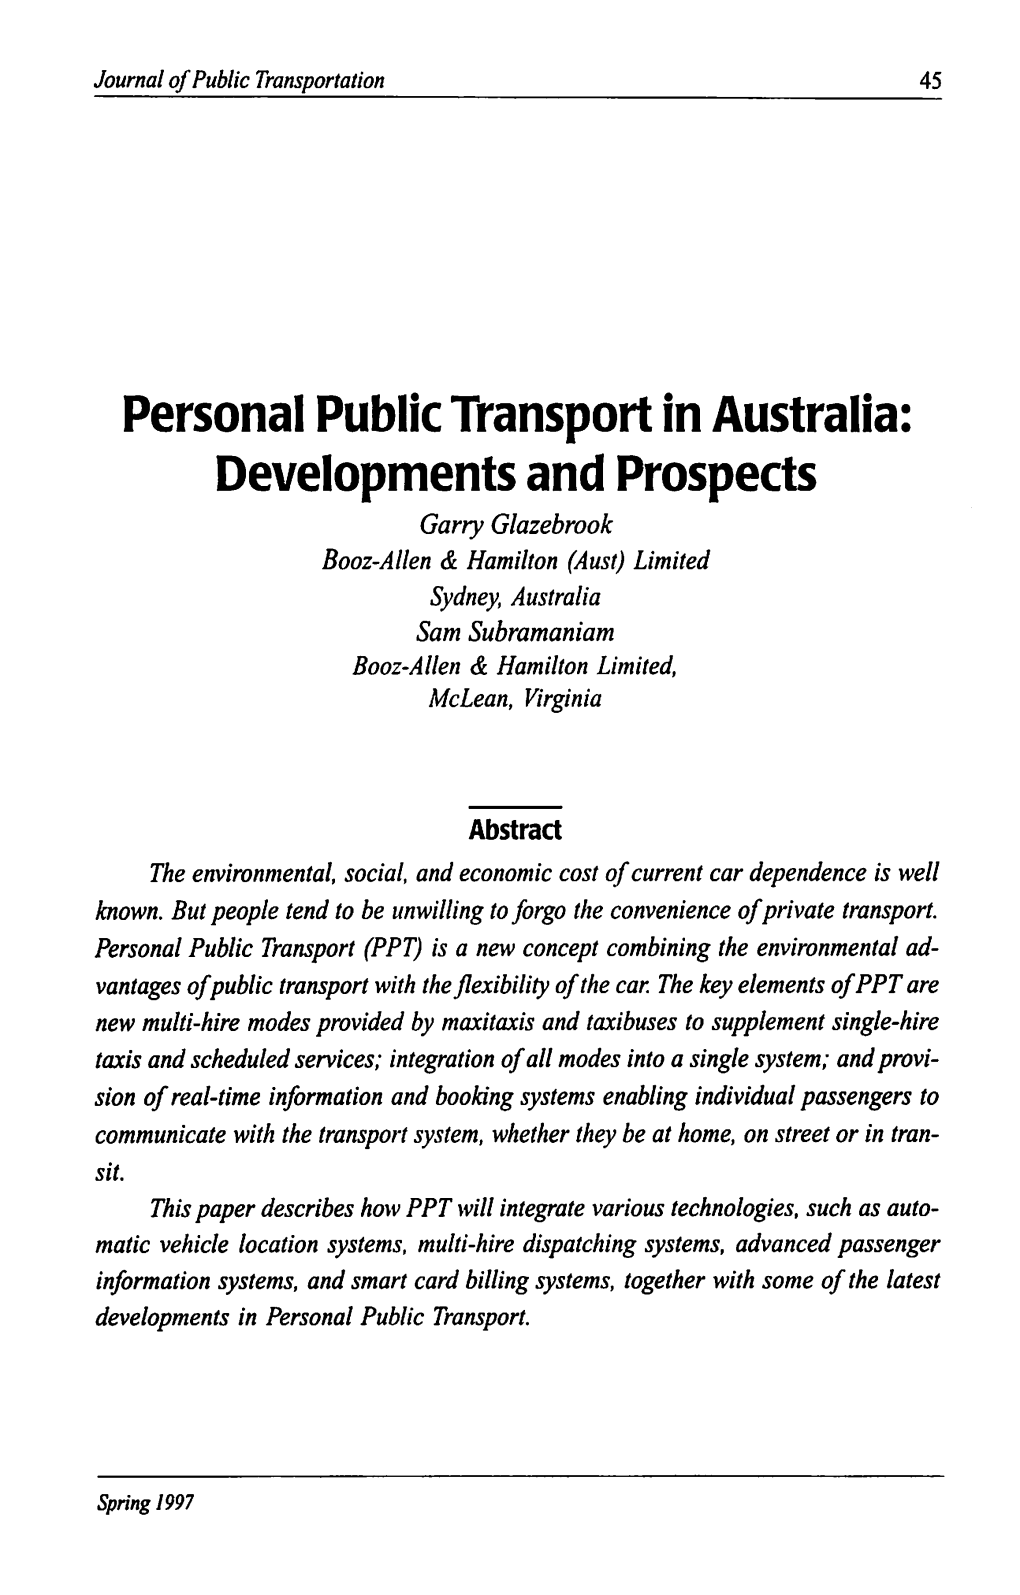 Personal Public Transport in Australia